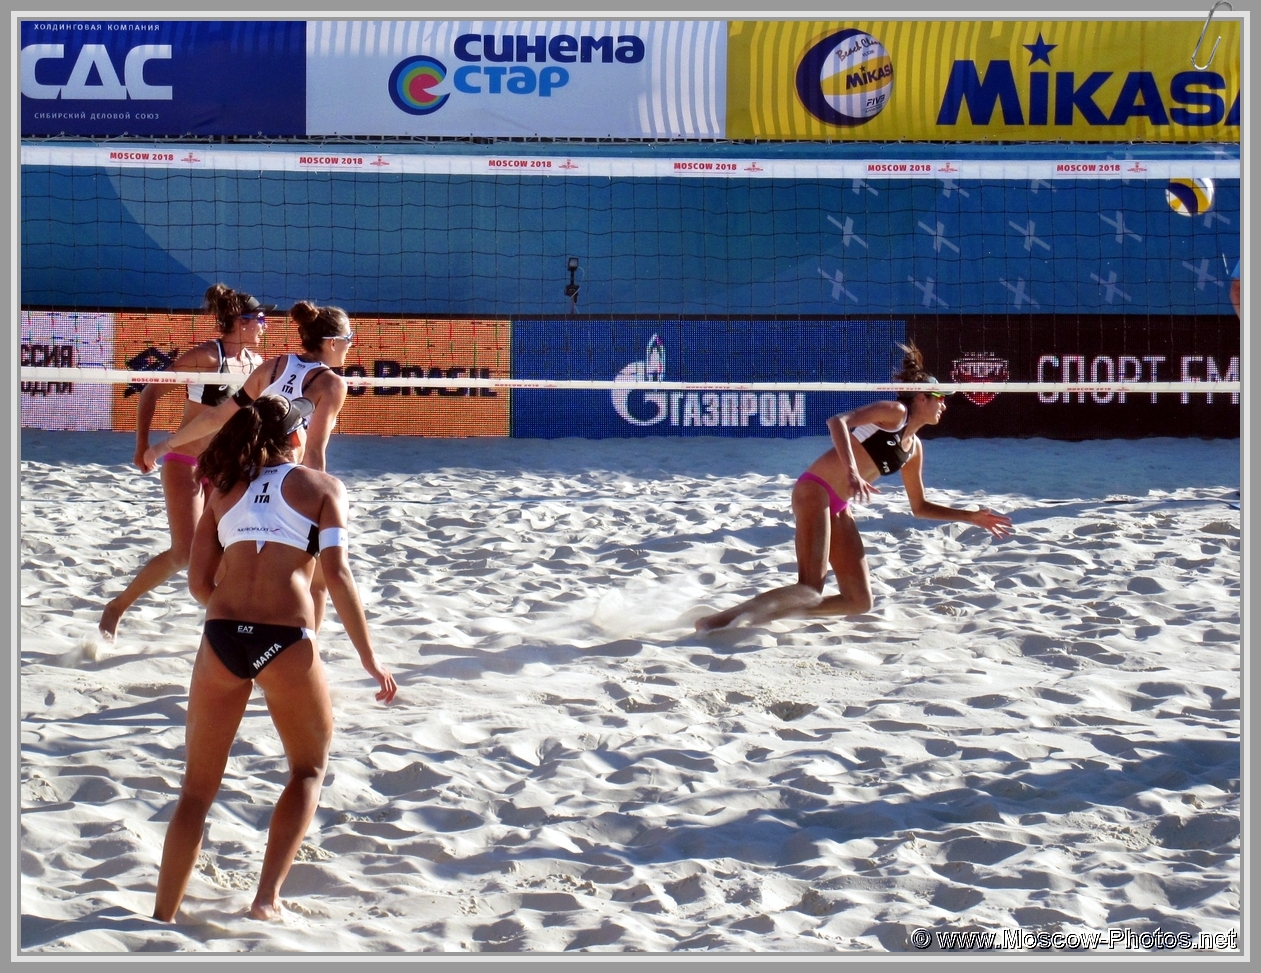 Marta Menegatti and Viktoria Orsi Toth - Italian Team at FIVB Beach Volleyball World Tour in Moscow 2018 